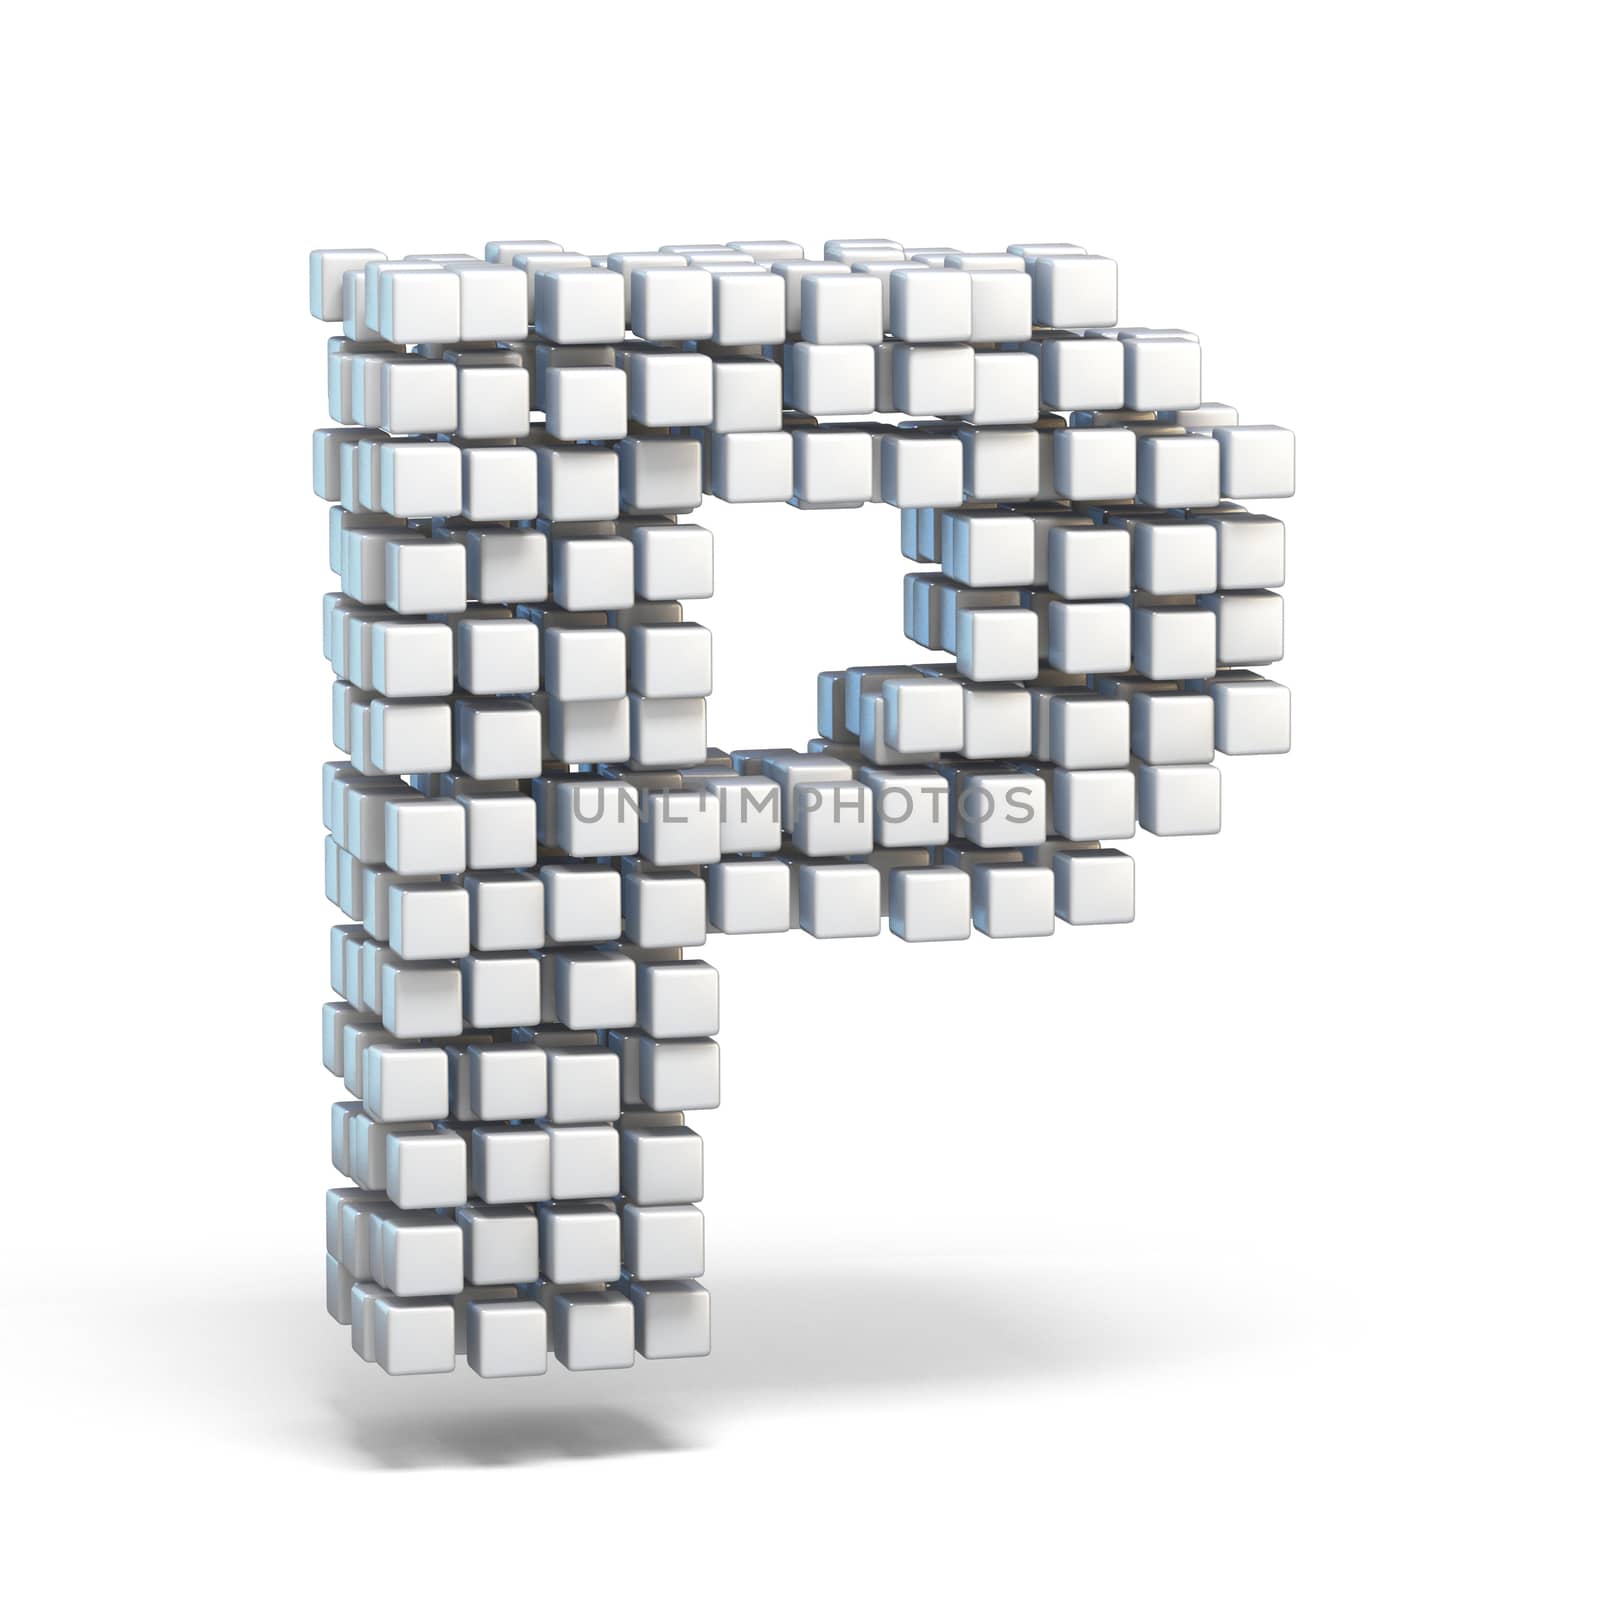 White voxel cubes font Letter P 3D render illustration isolated on white background